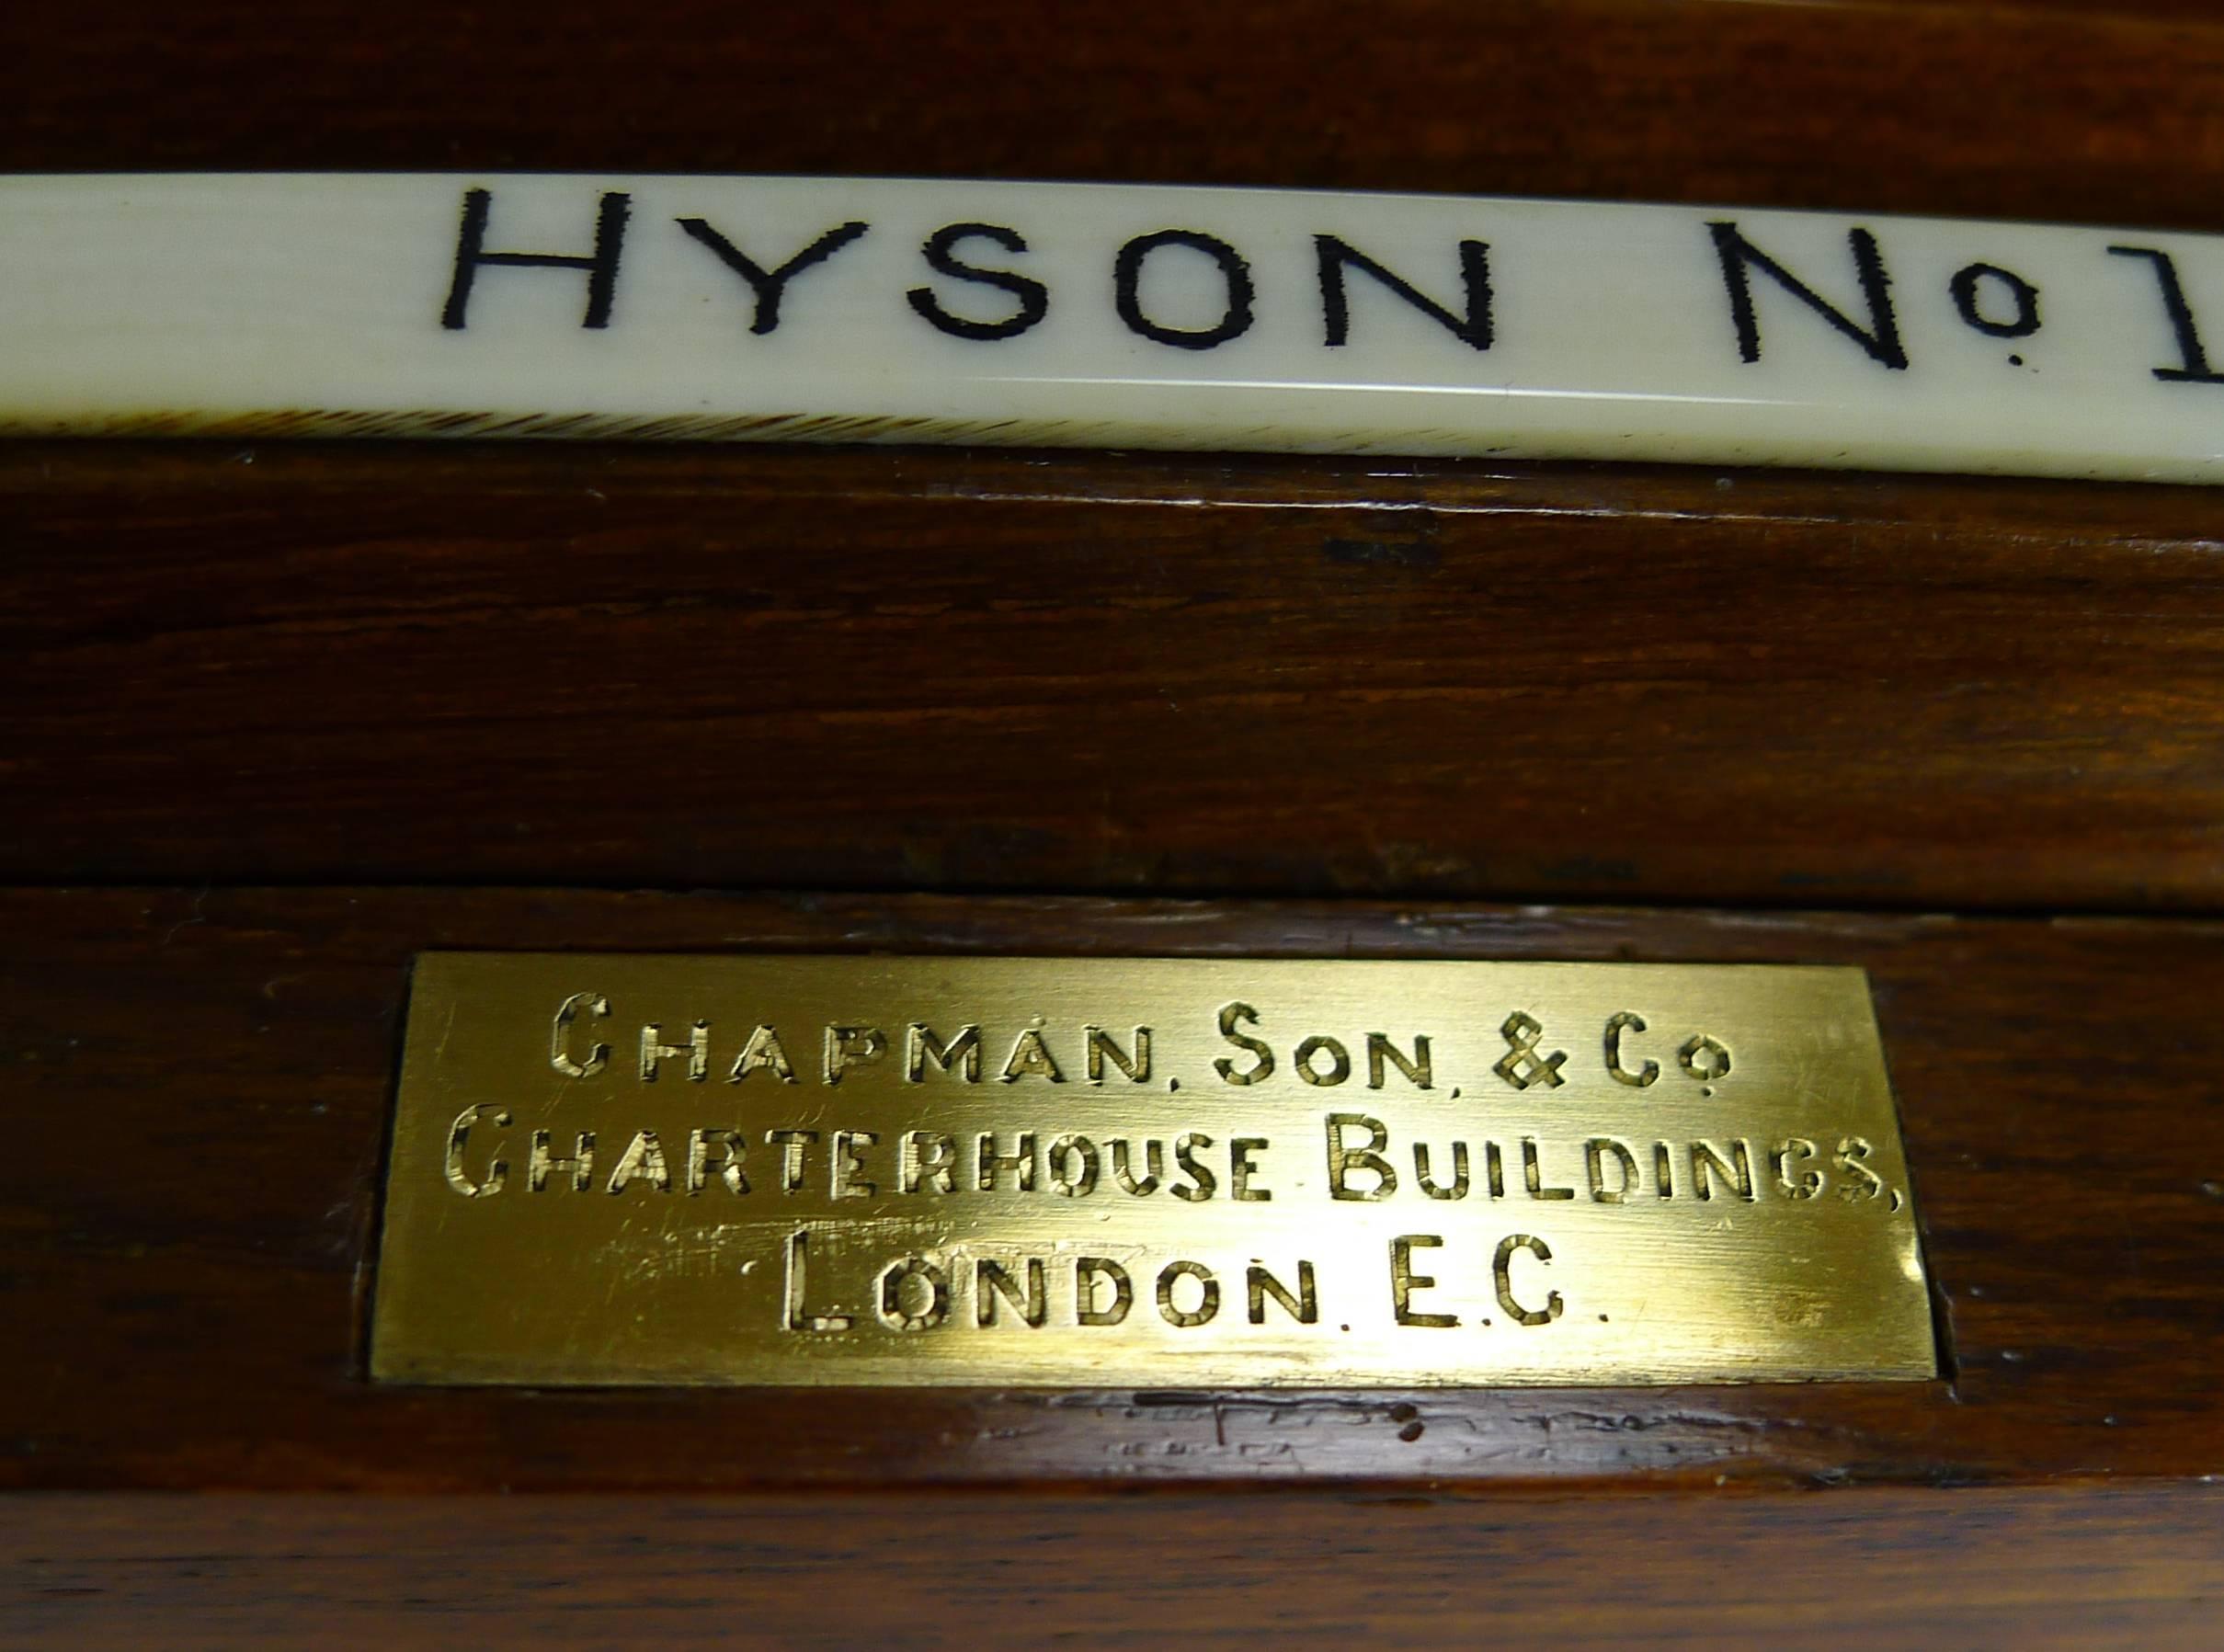 European Brass Bound Military Style Tea Sample Box / Caddy by Chapman Son & Co., London